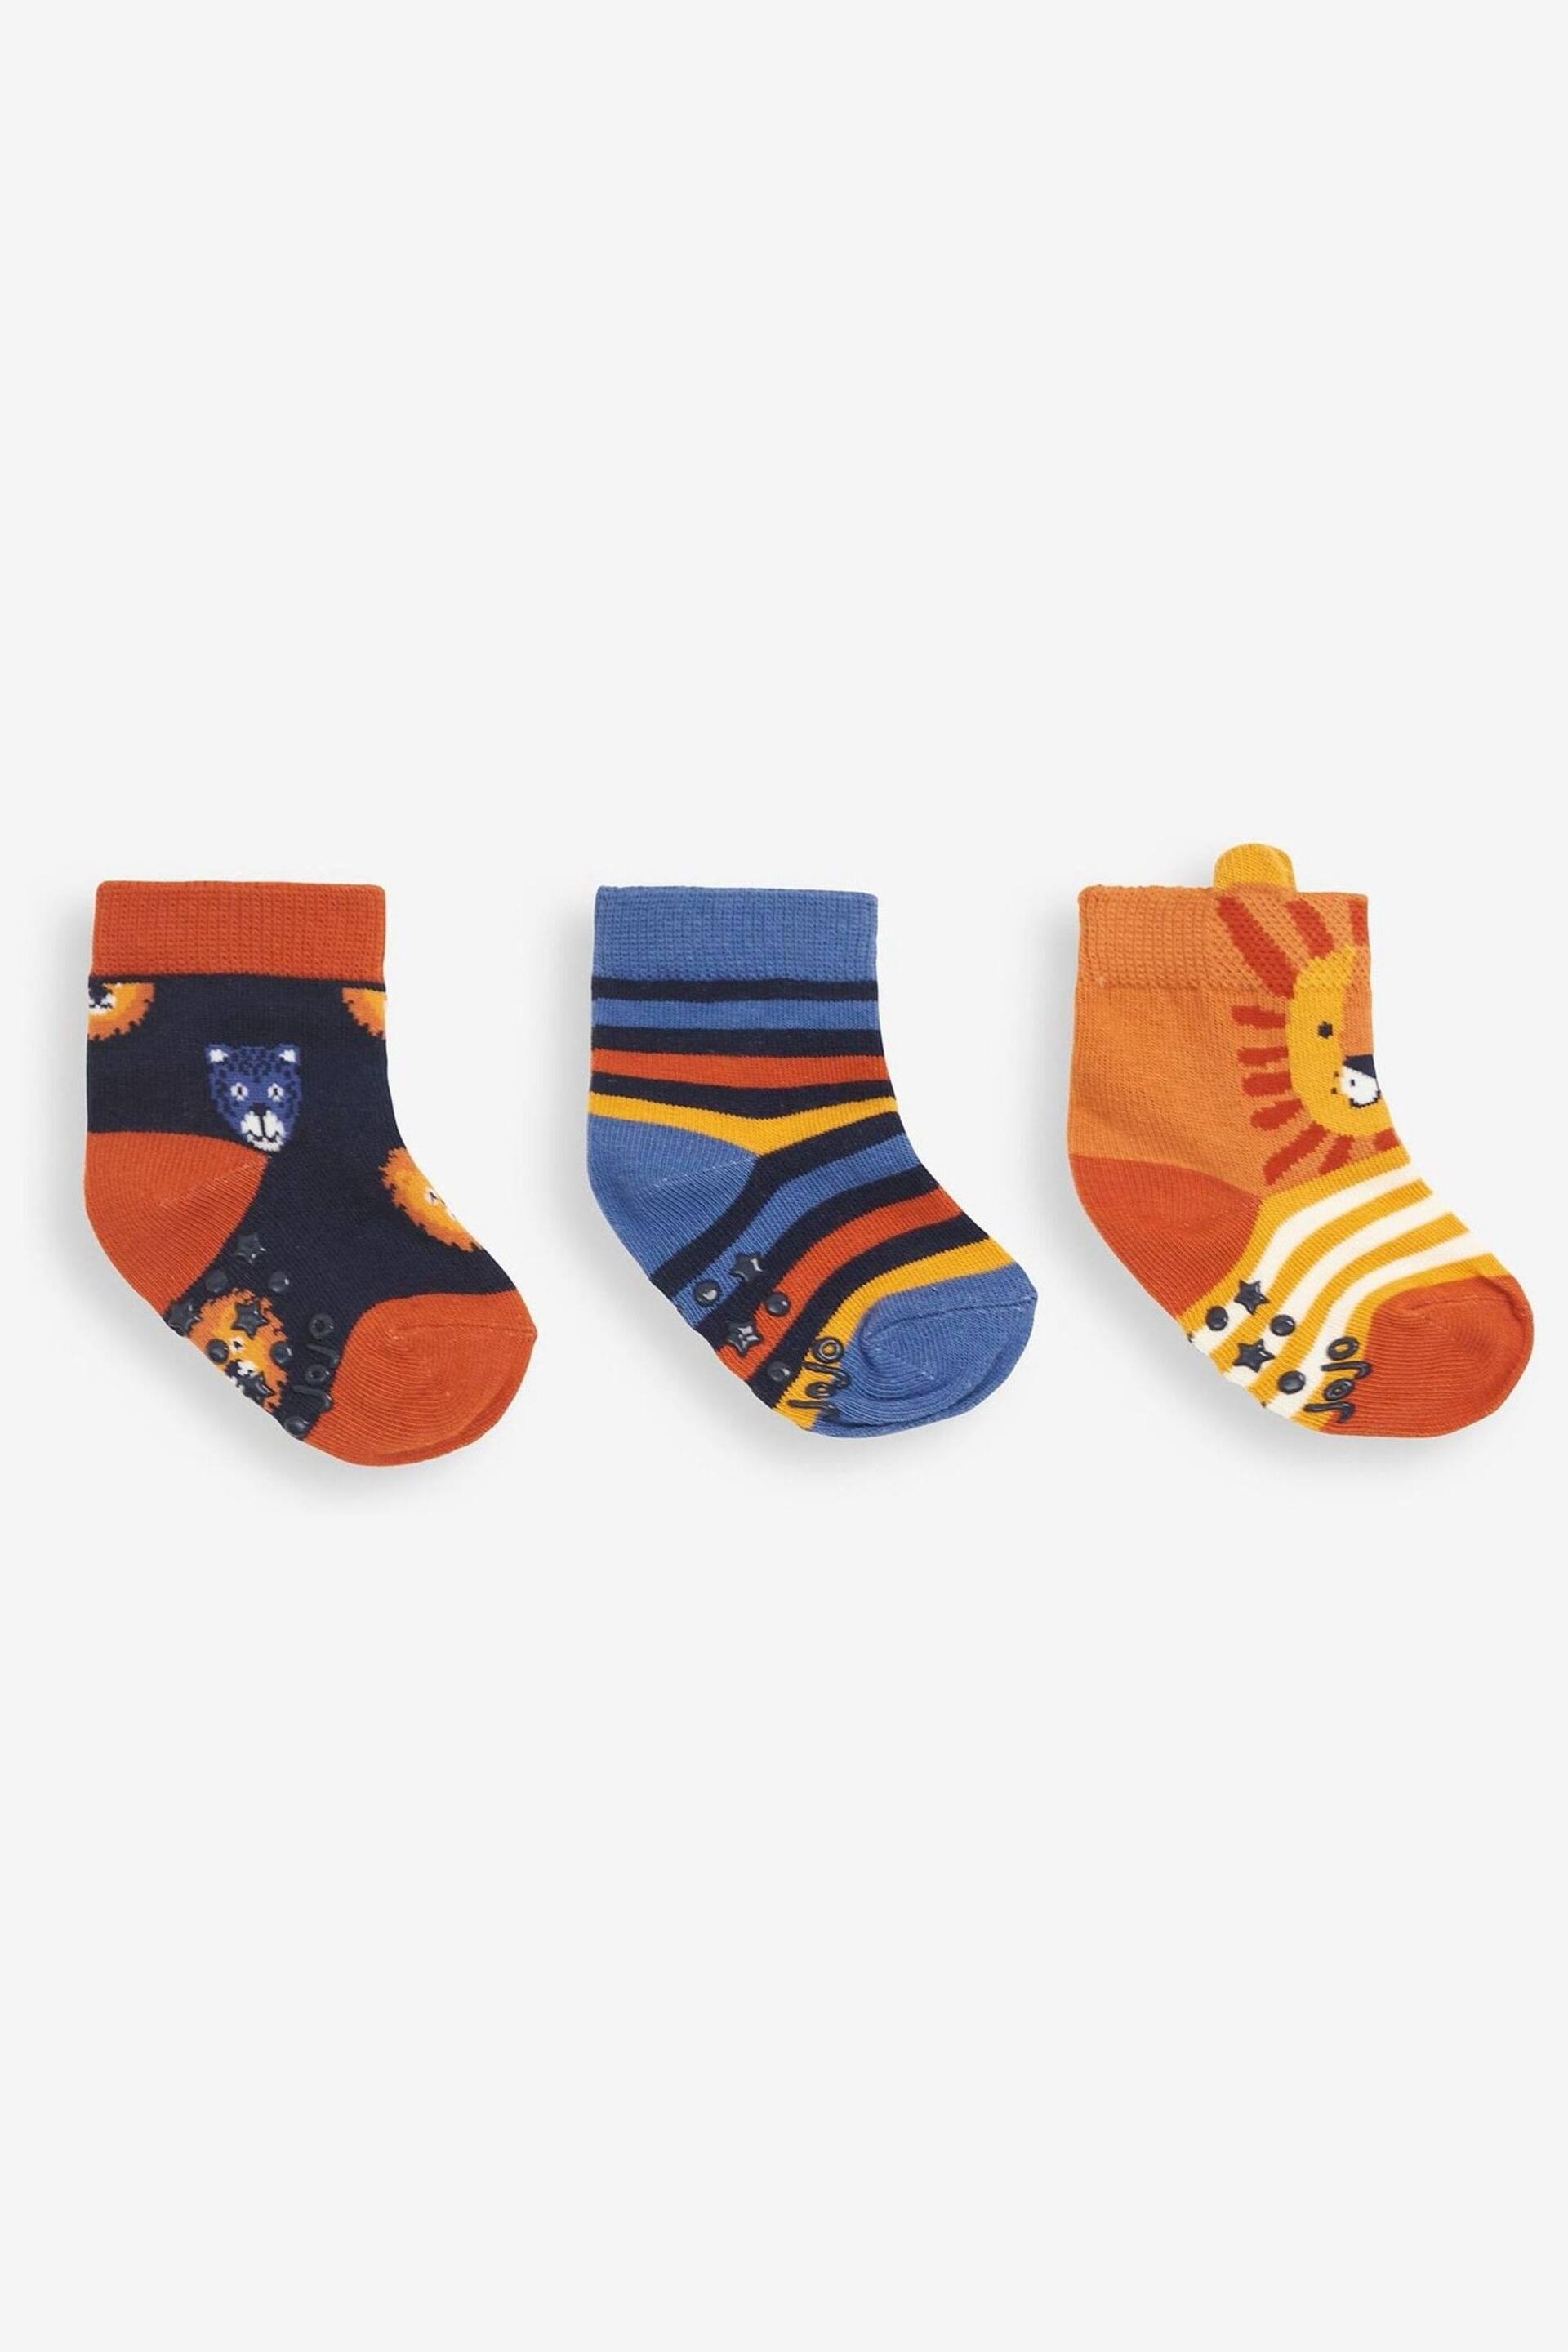 JoJo Maman Bébé Orange 3-Pack Safari Socks - Image 1 of 2